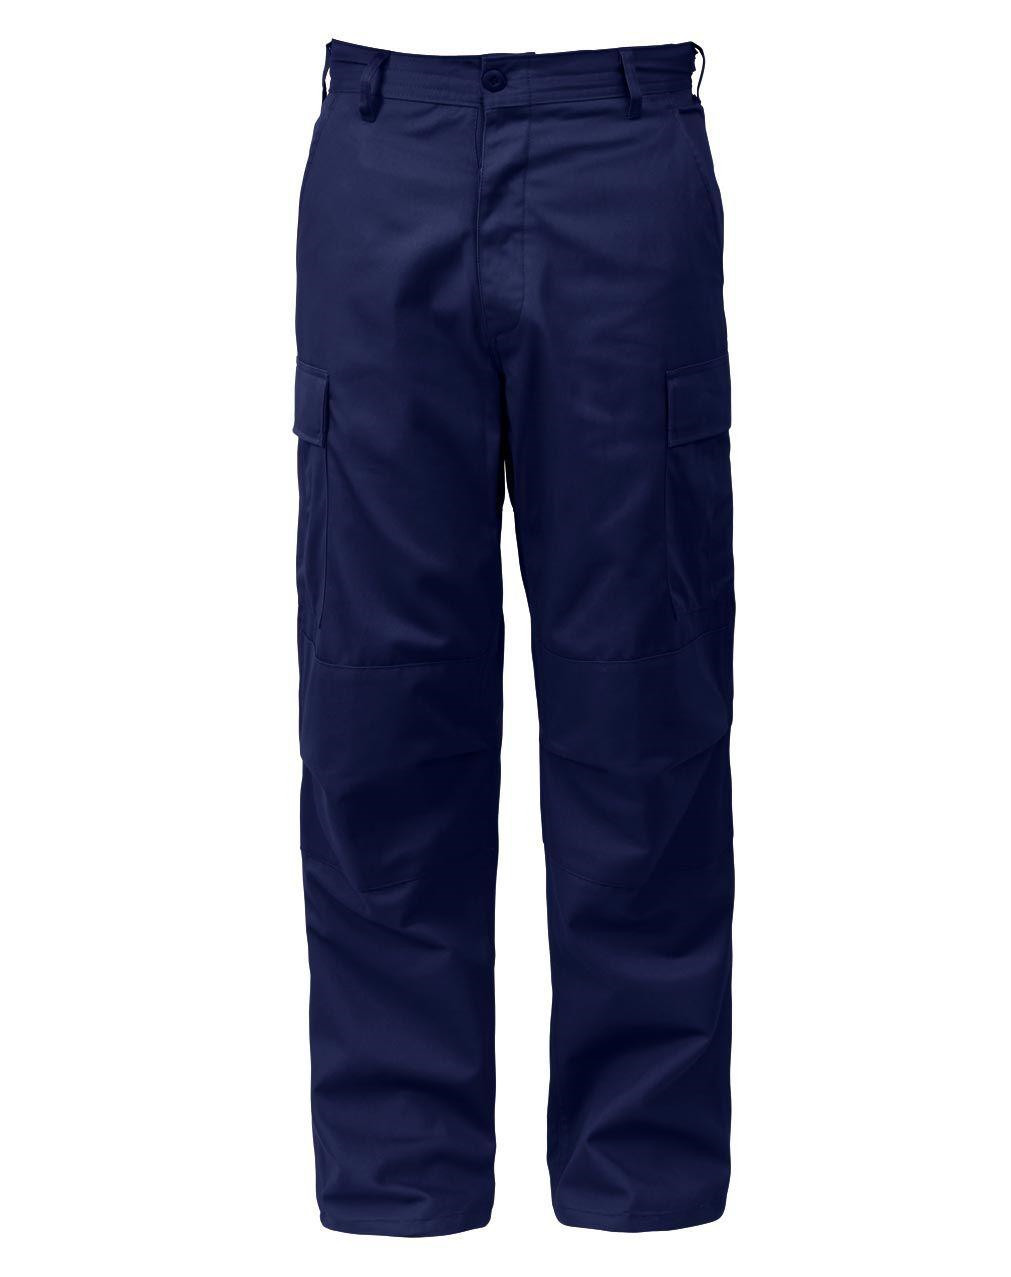 Rothco Uniform Bukser (Navy, 2XL)